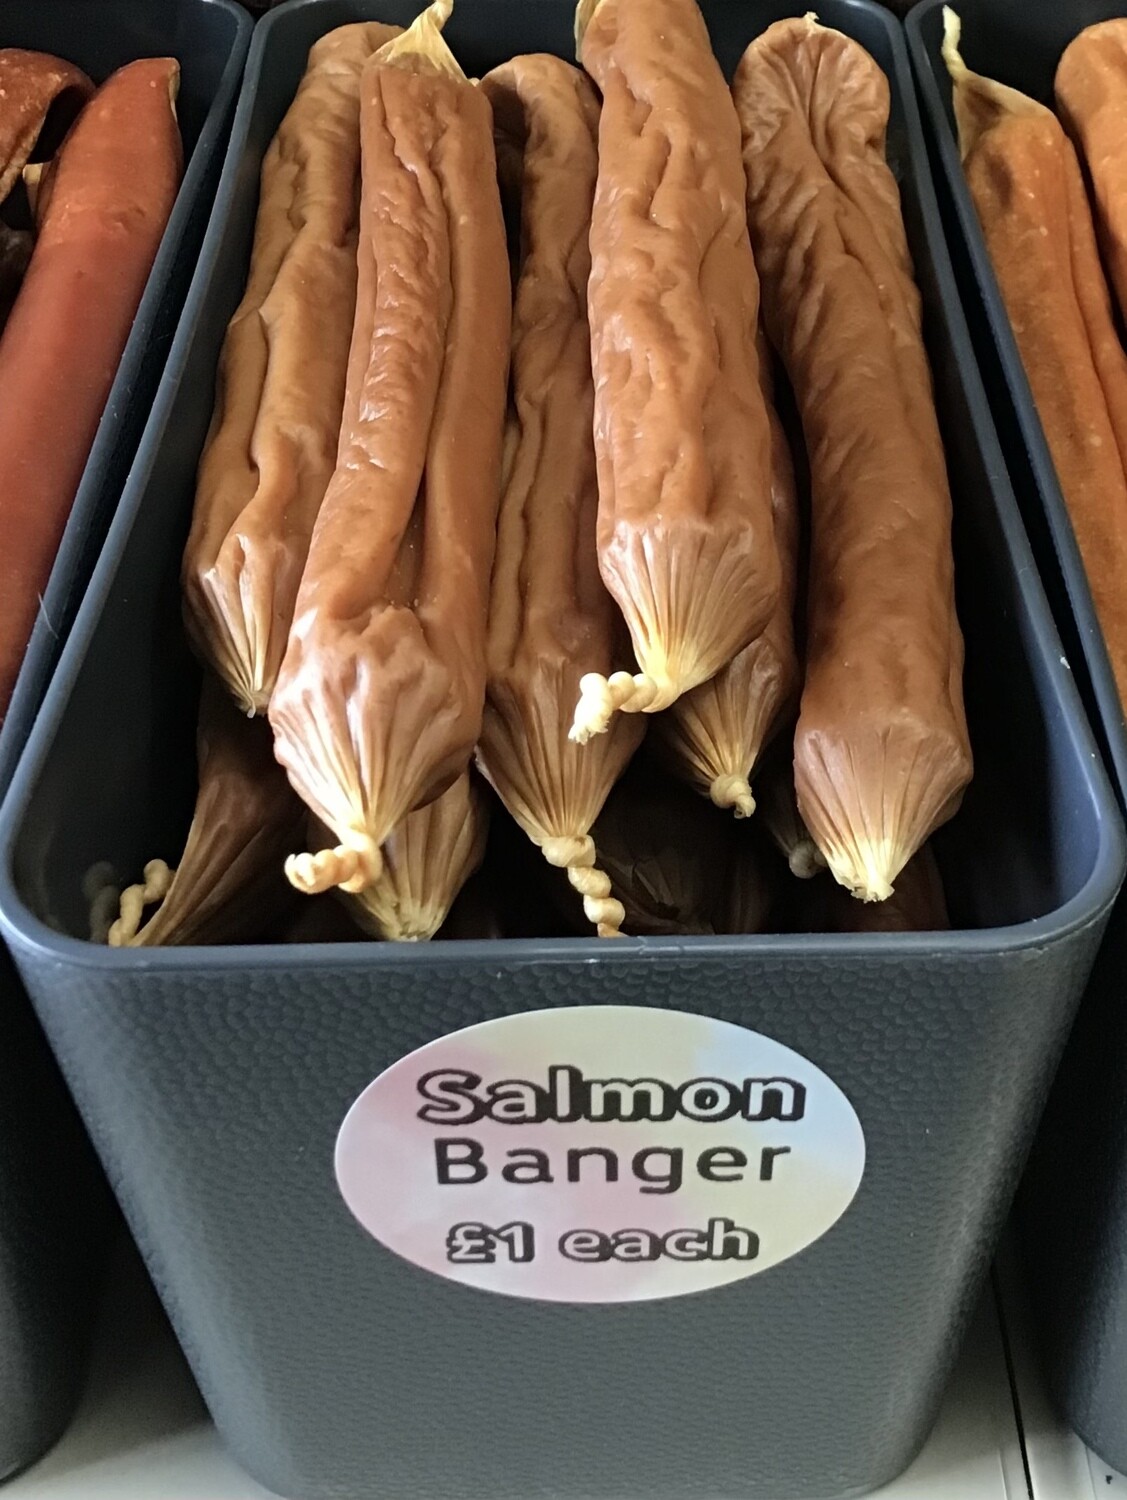 Salmon Banger (each)